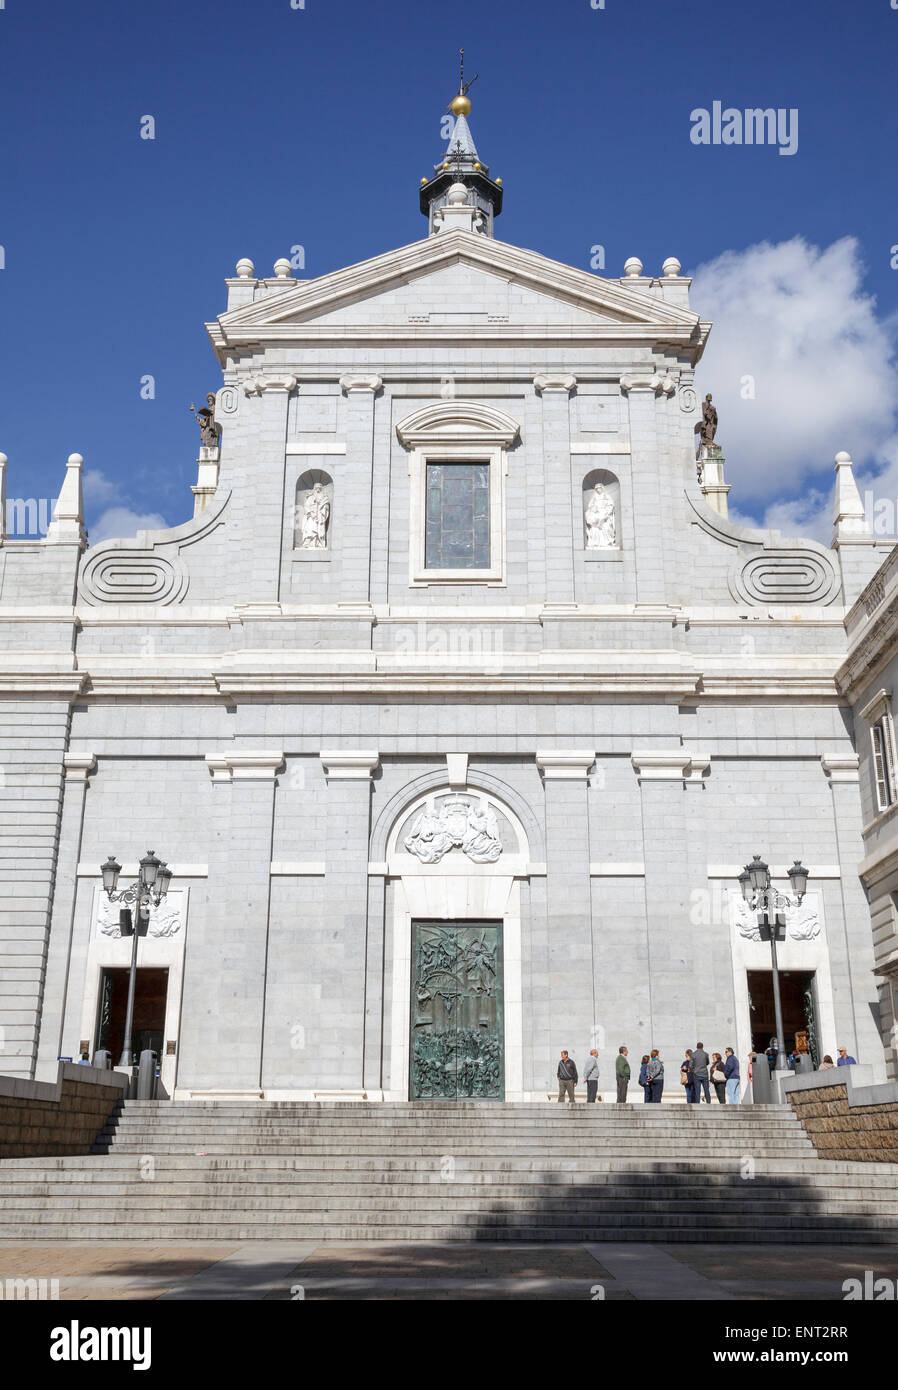 Santa Maria la Real de la cathédrale de l'Almudena, Madrid, Espagne Banque D'Images